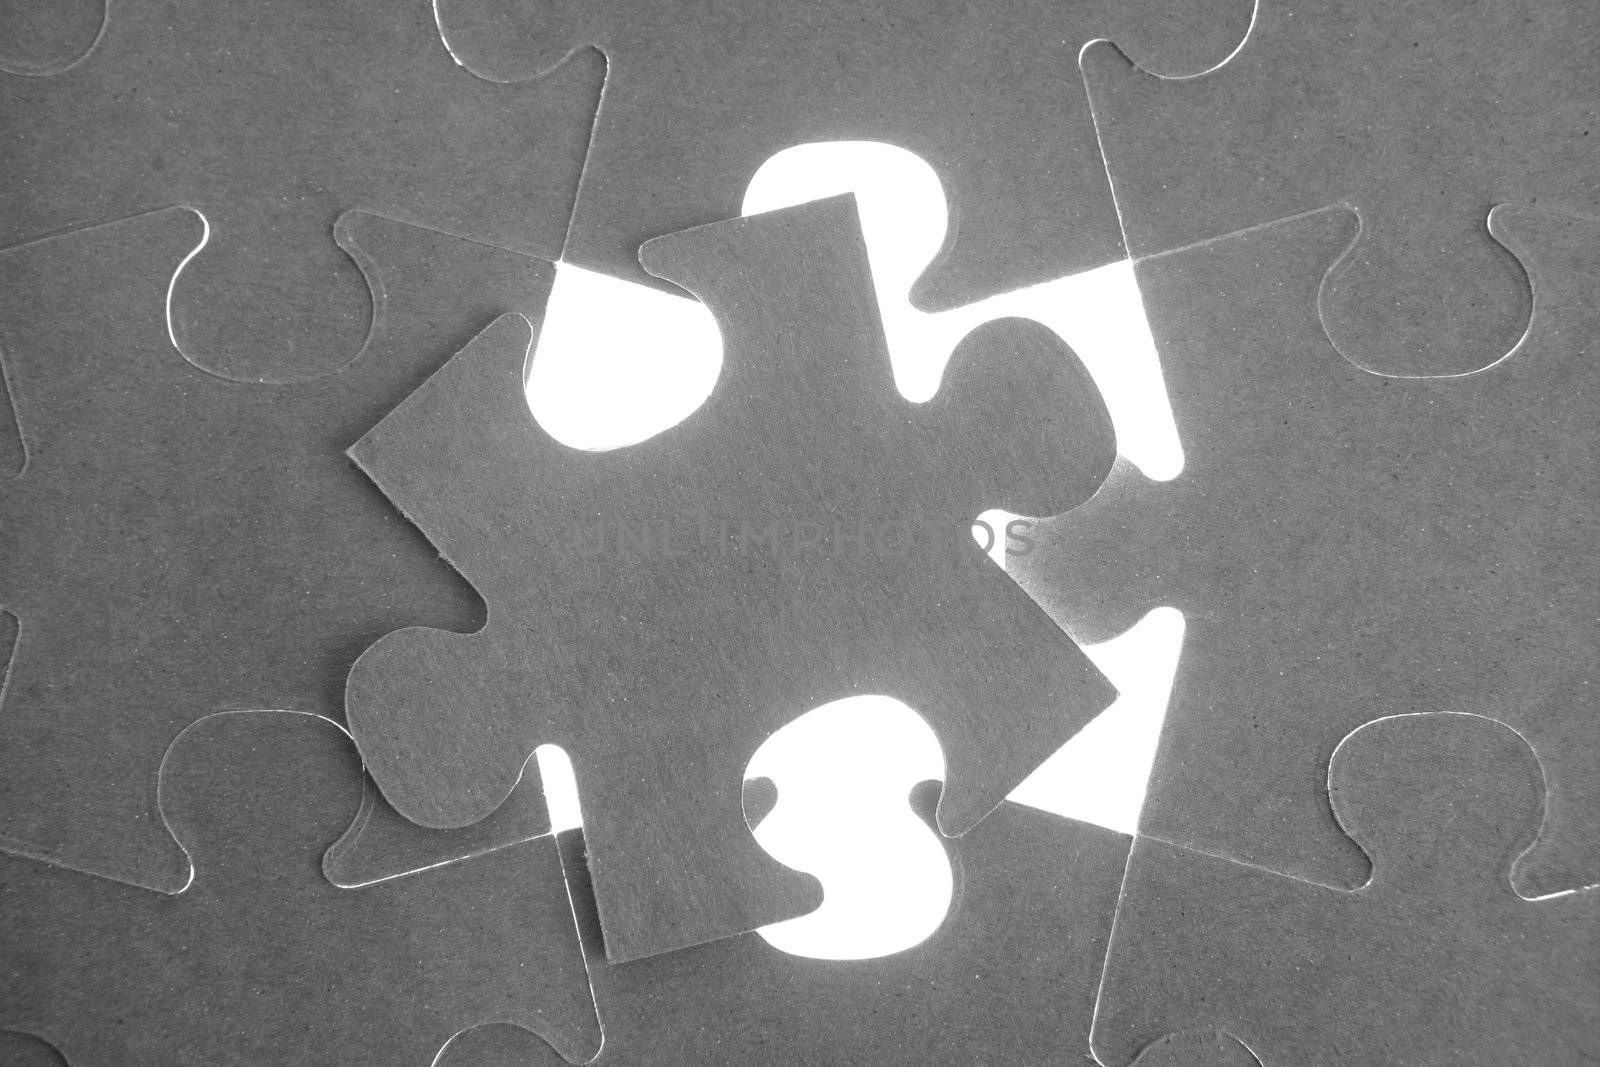 Puzzle, communication teamwork metaphor, conection challenge